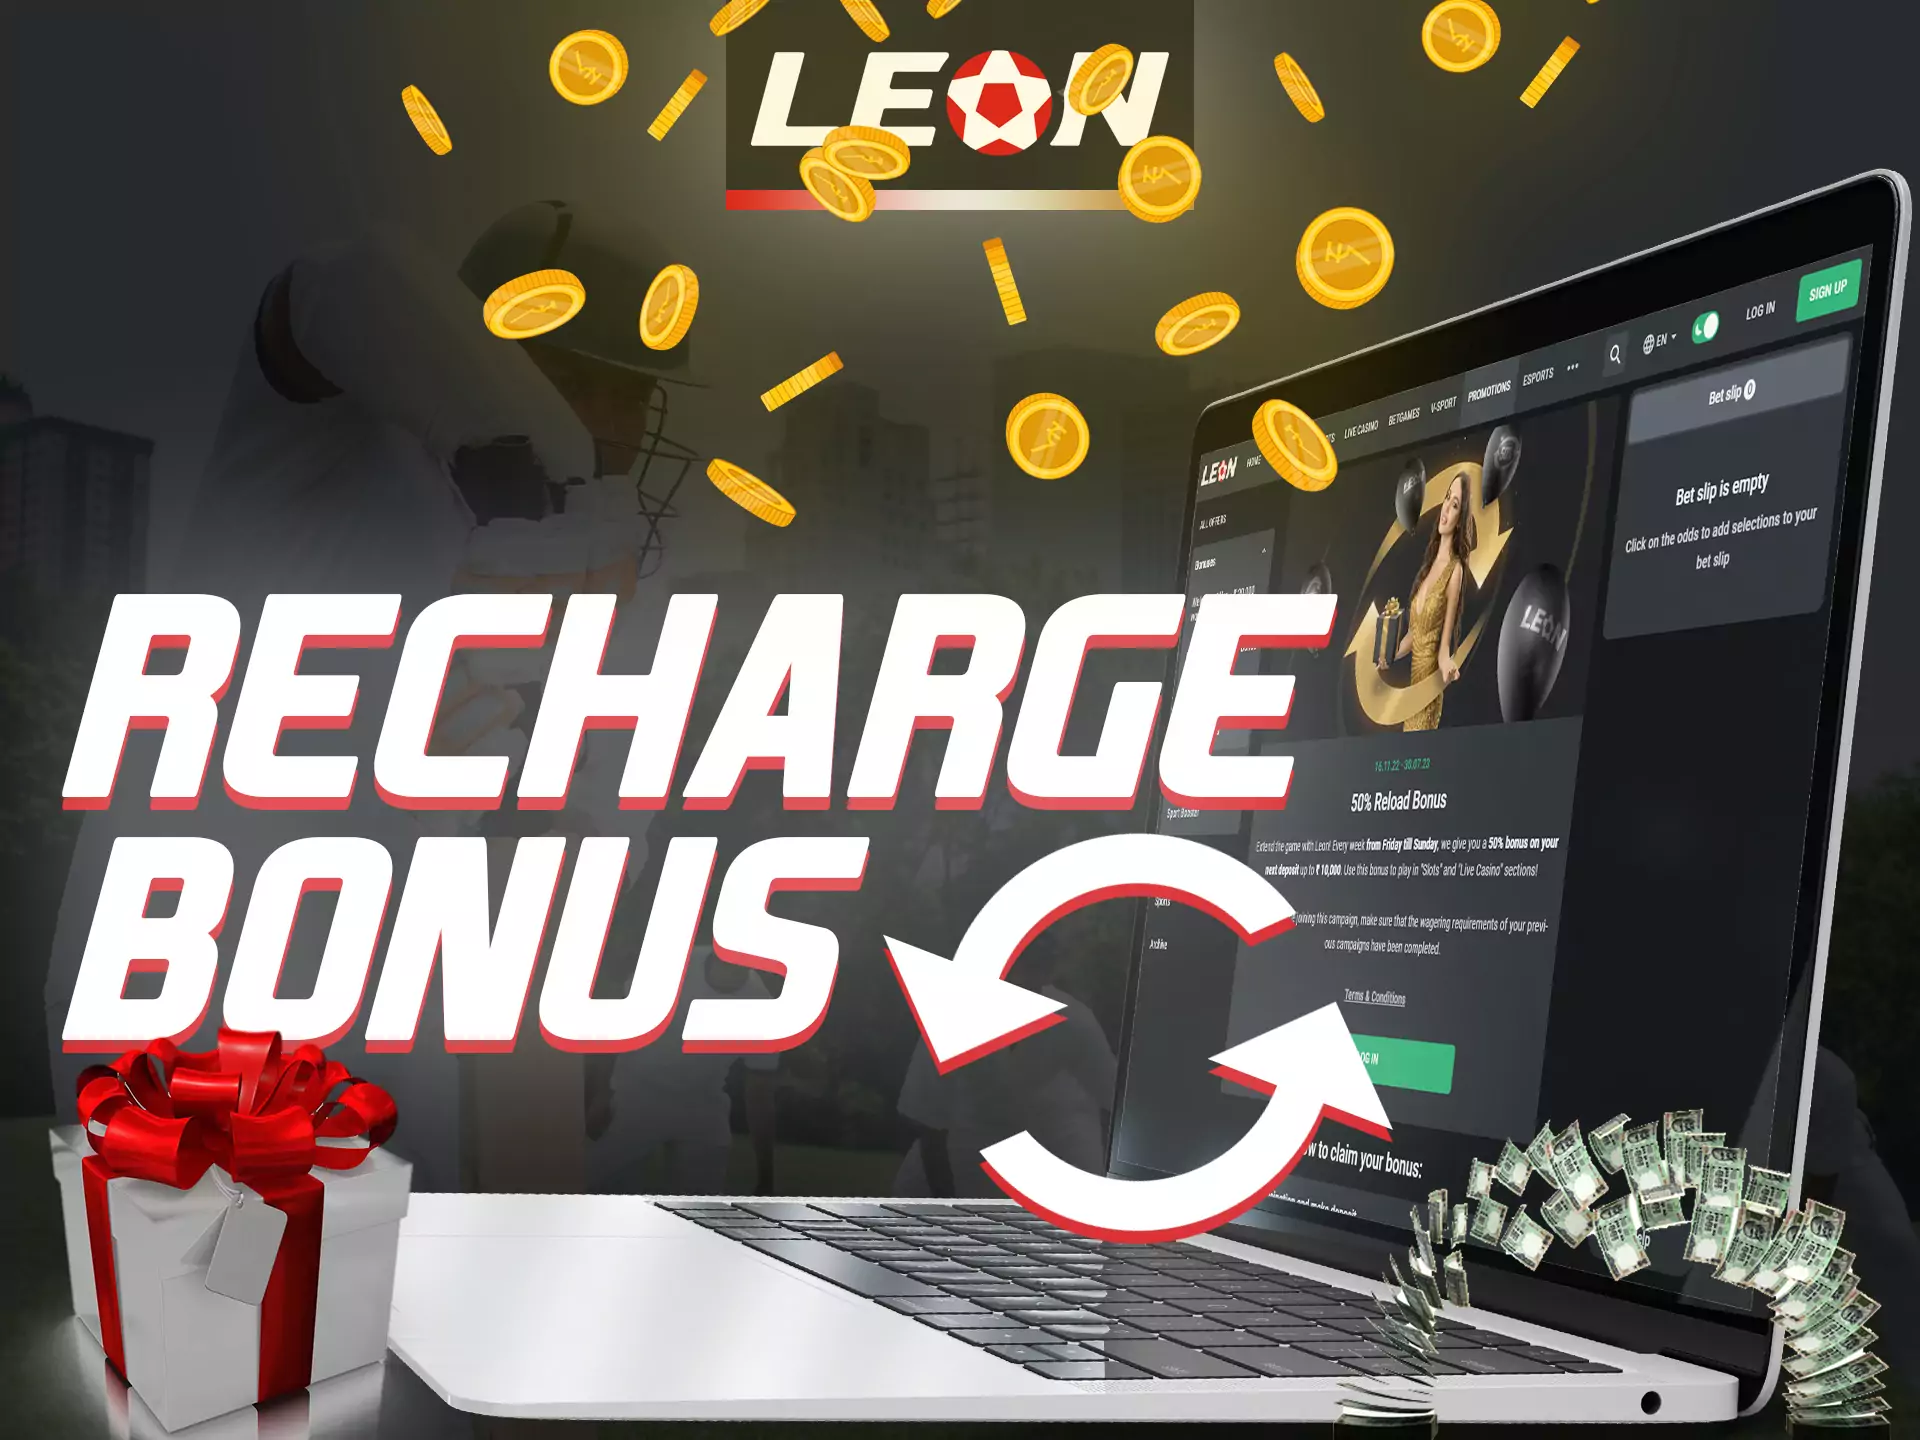 At Leonbet, always count on the recharge bonus.